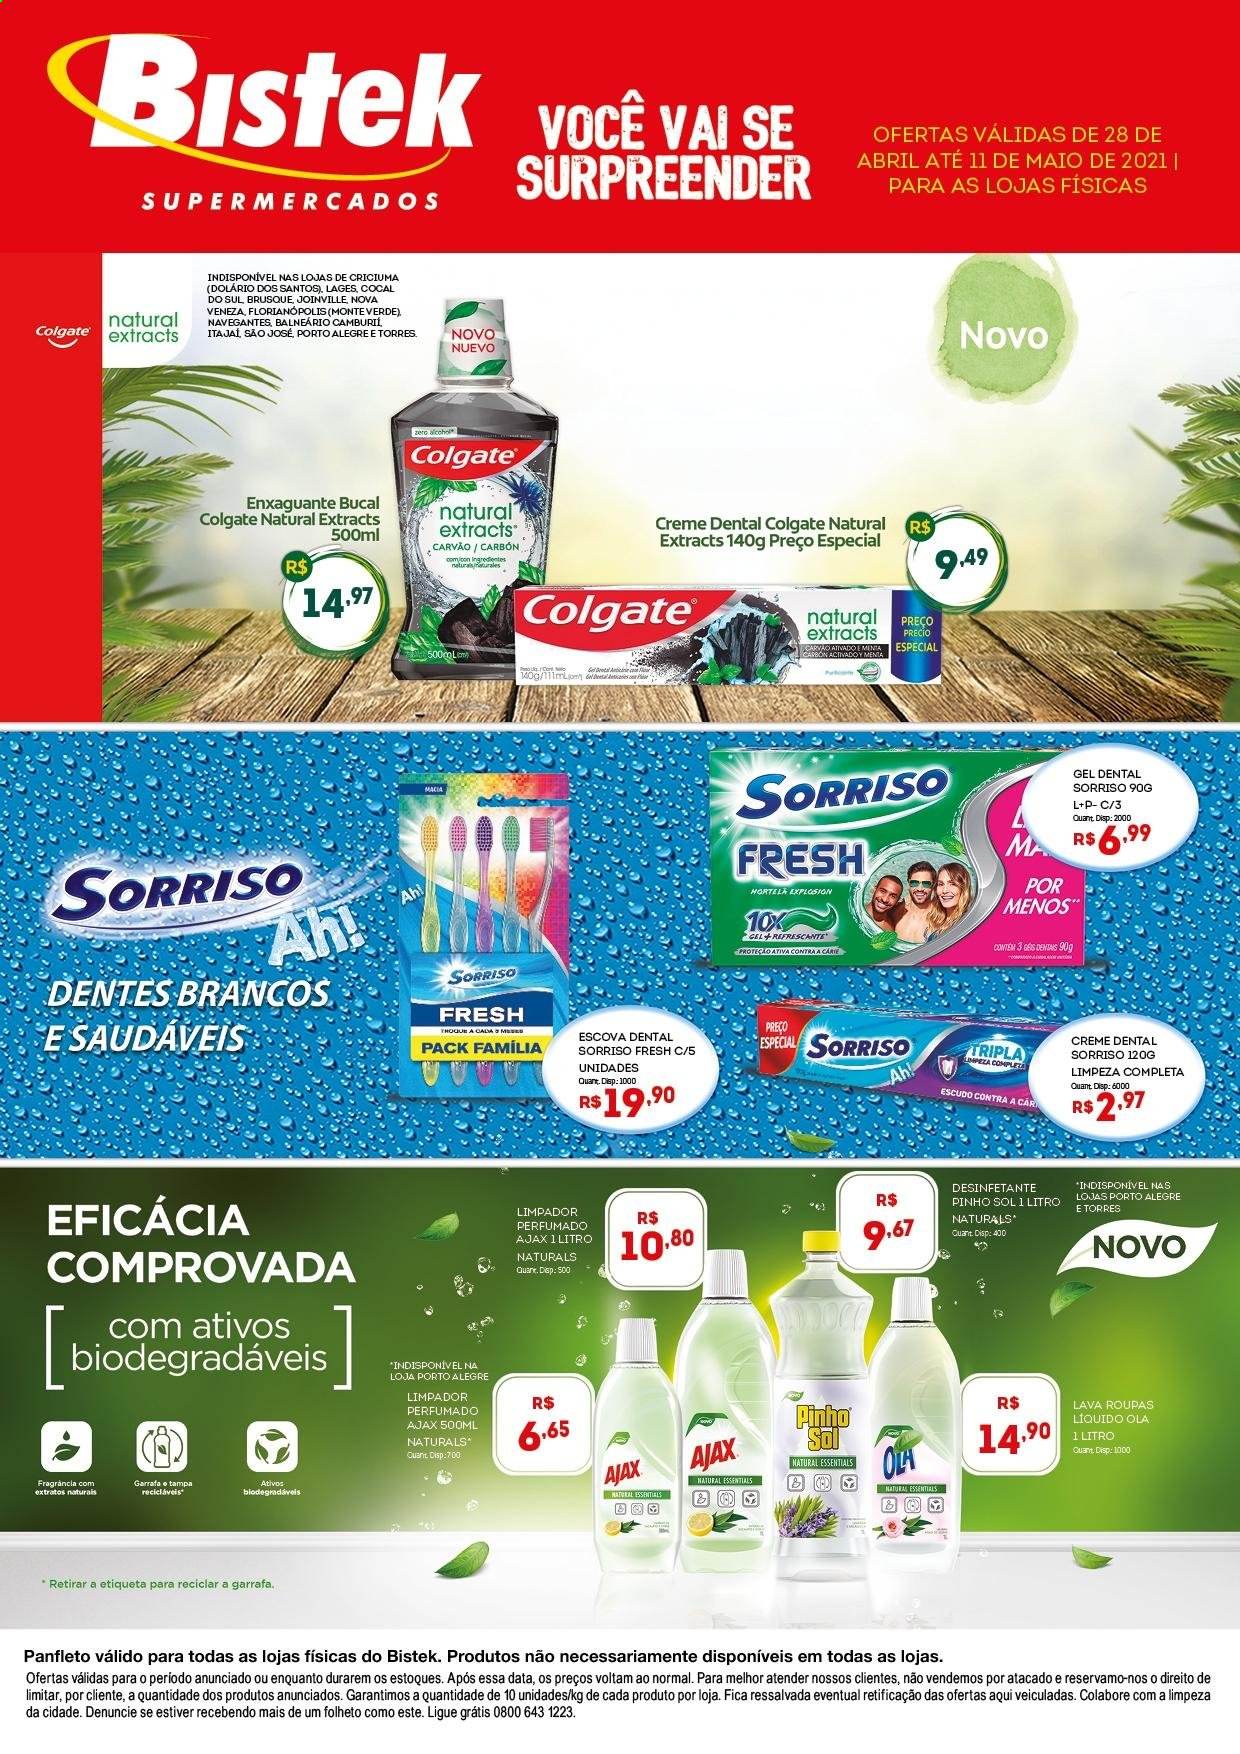 Encarte Bistek Supermercados  - 28.04.2021 - 11.05.2021.